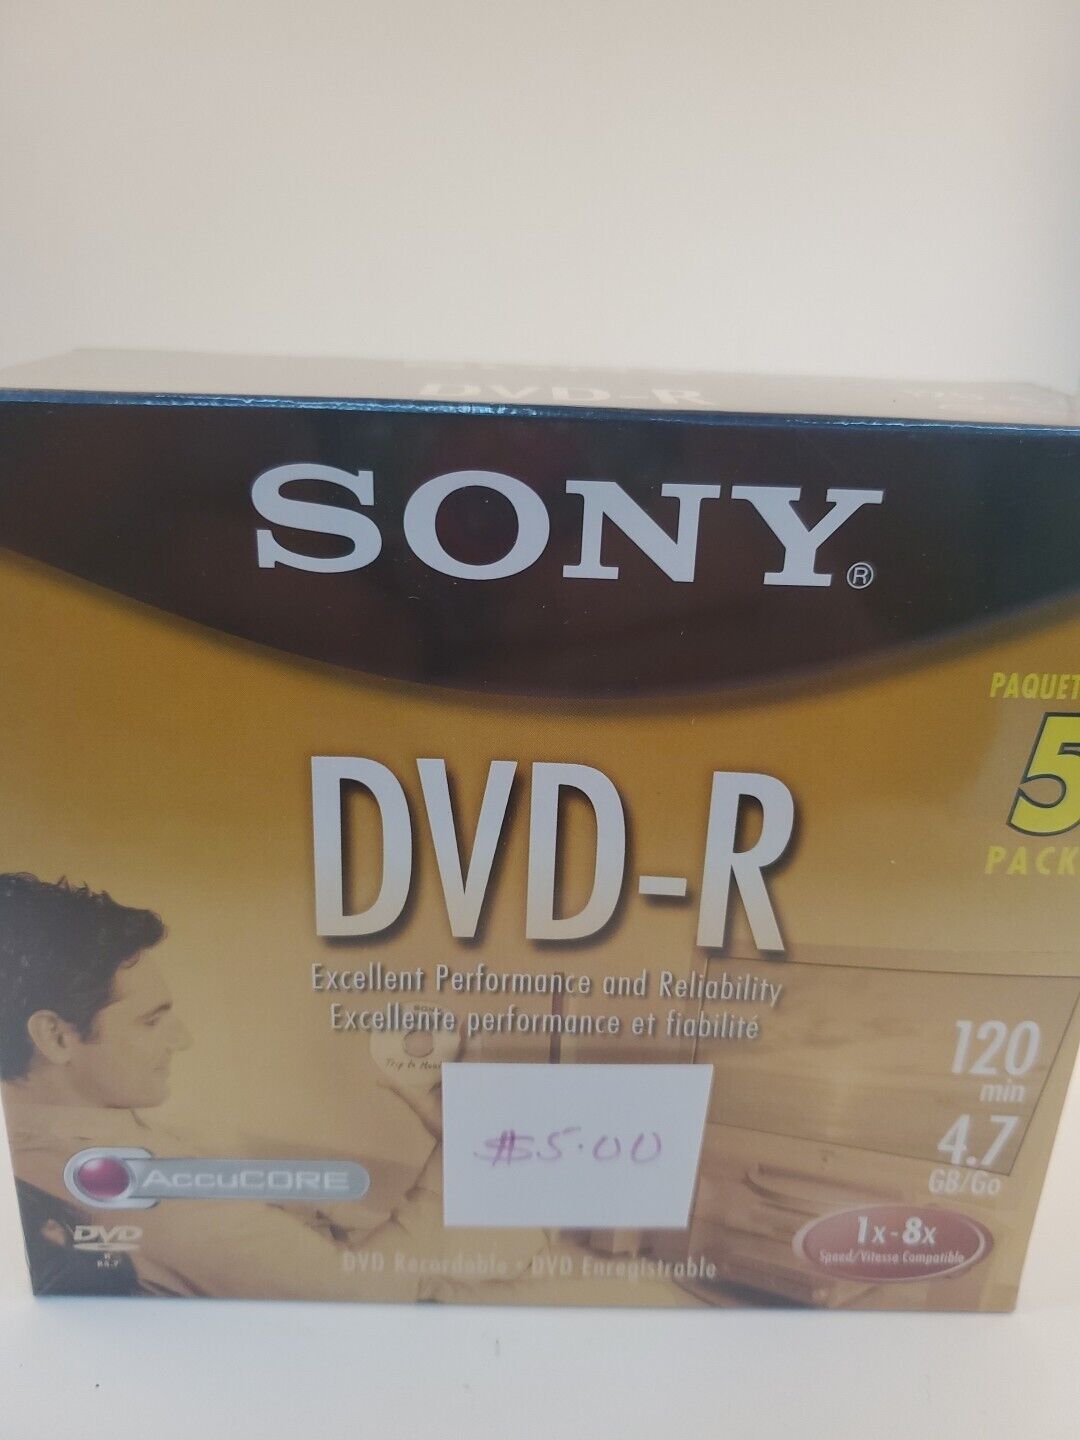 Sony DVR-R 5 Pack 120 Min. 4.7 GB 1x-8x Speed DVD Recordable NIB sealed